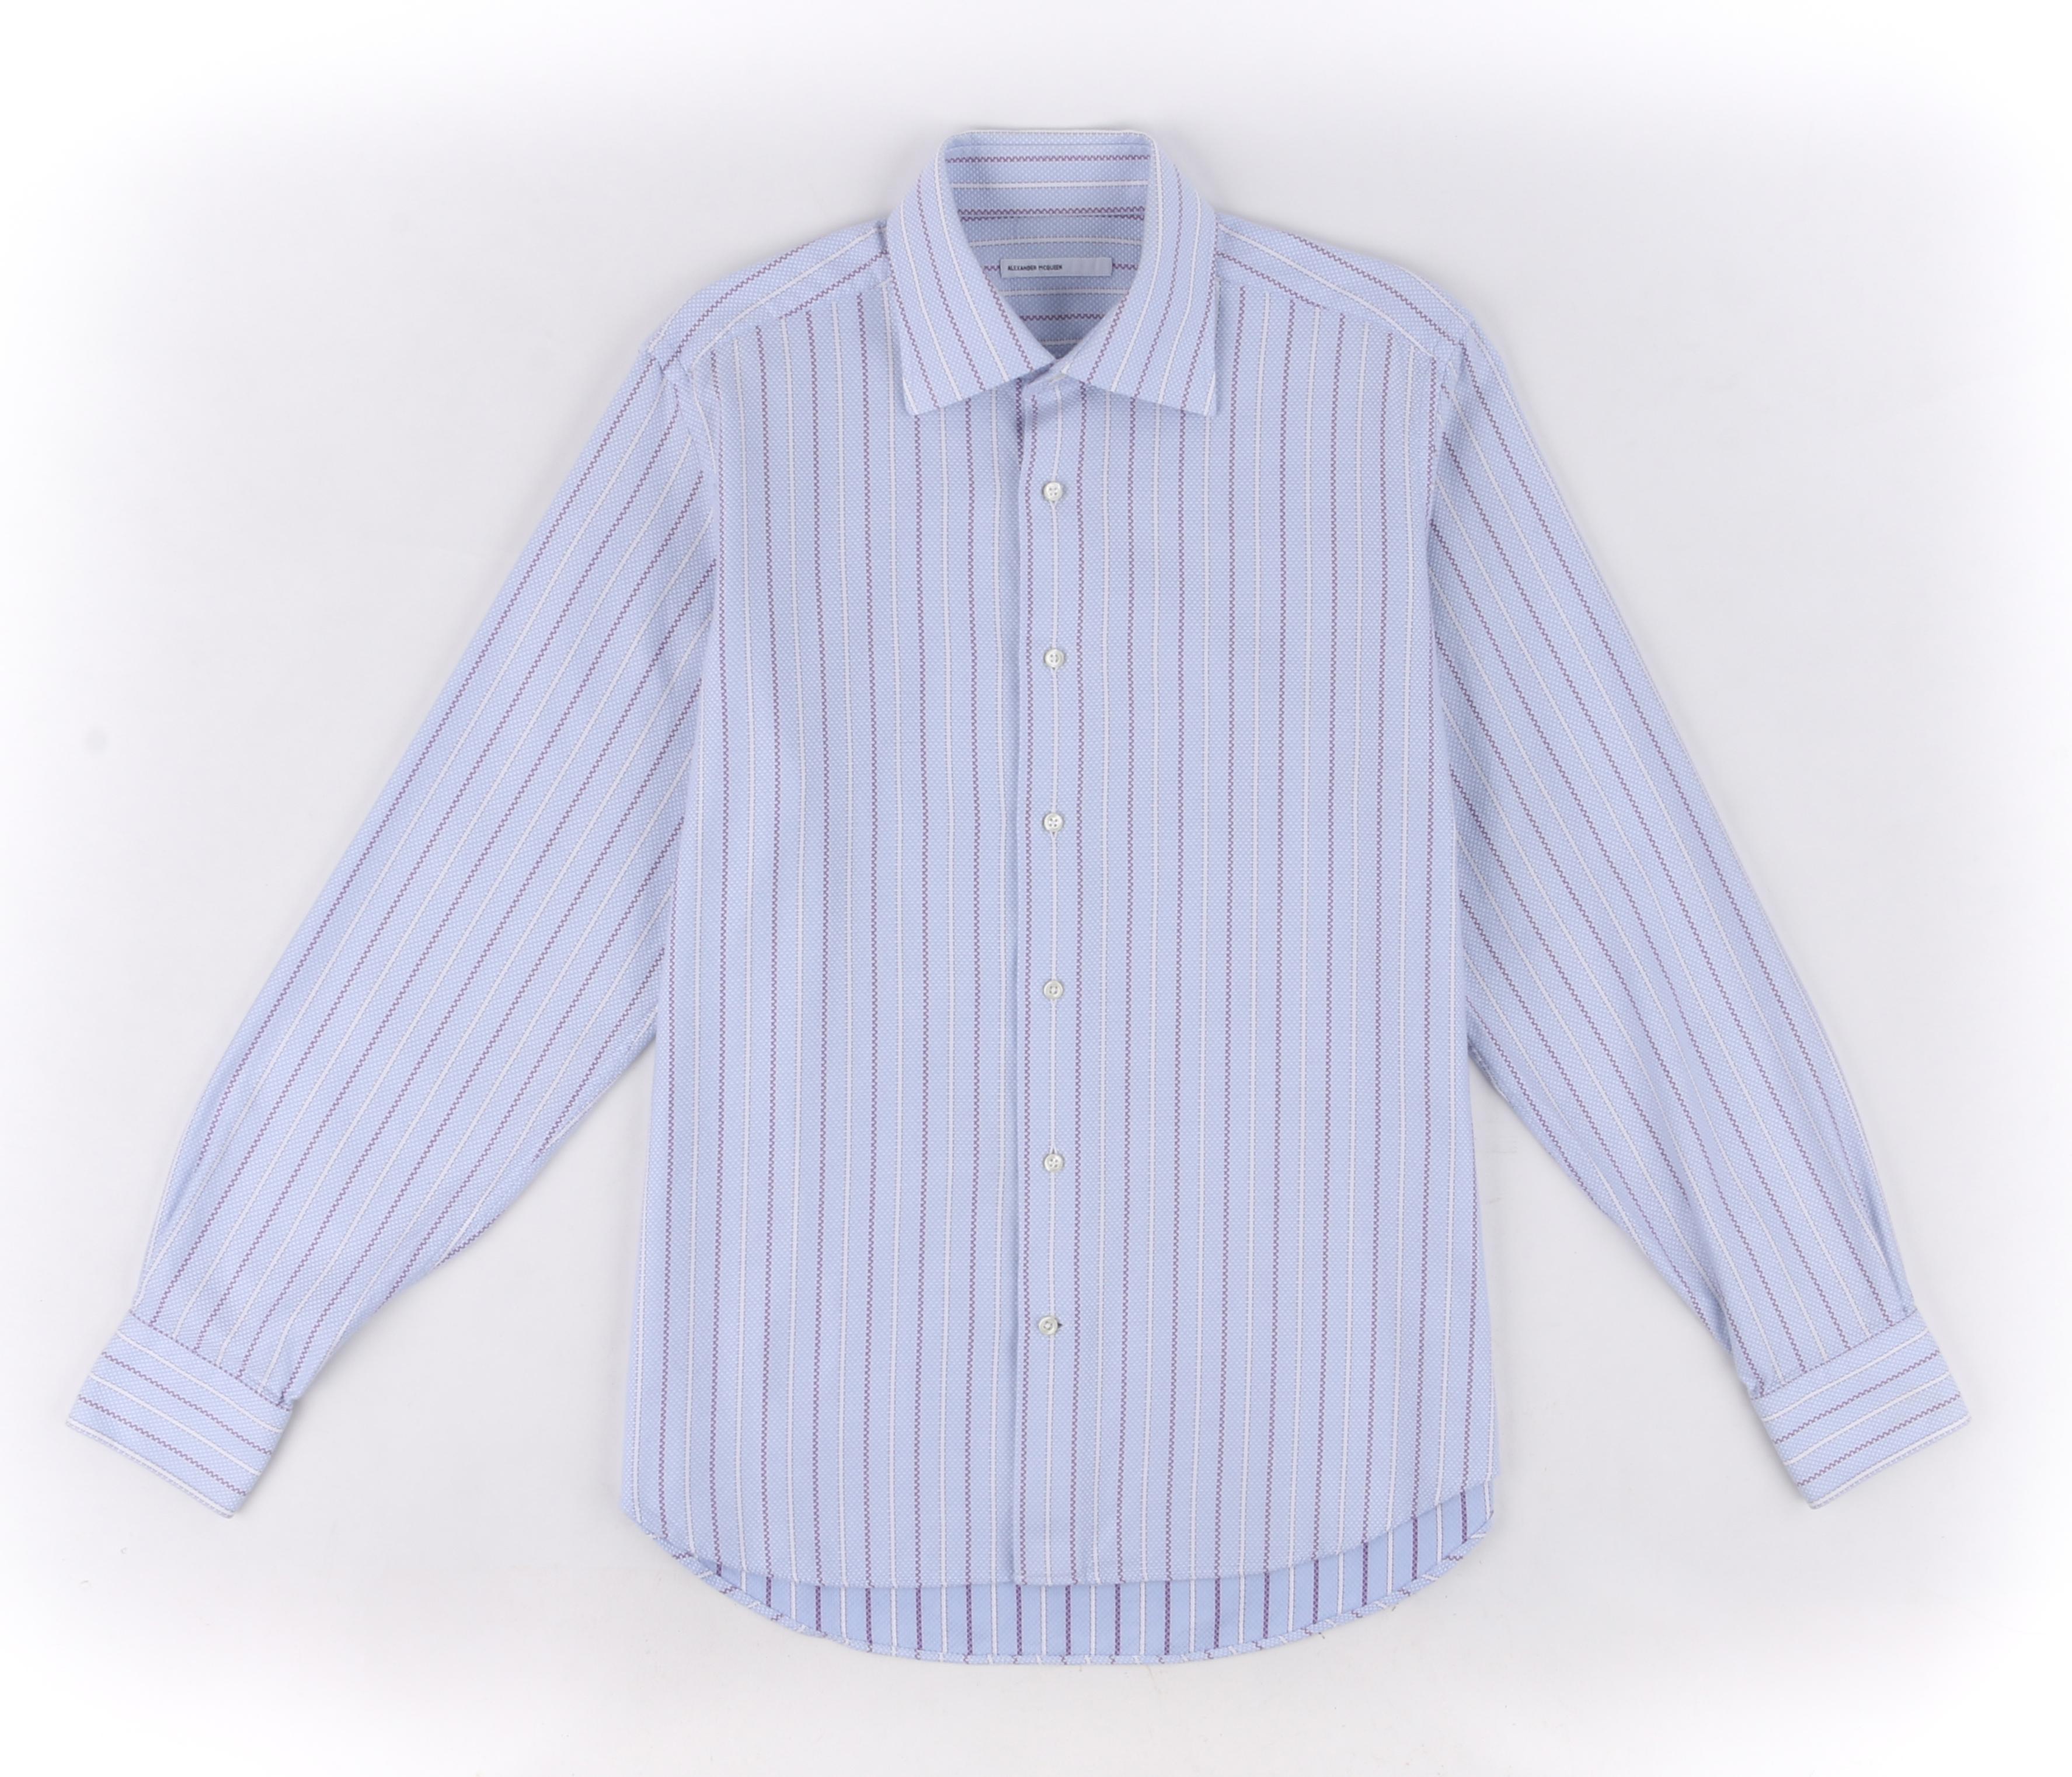 ALEXANDER McQUEEN S/S 1995 Striped Crosshatch Button Front Men's Dress Shirt 
  
Brand / Manufacturer: Alexander McQueen
Collection: S/S 1995
Designer: Alexander McQueen
Style: button front shirt
Color(s): Shades of blue, white, purple 
Lined: